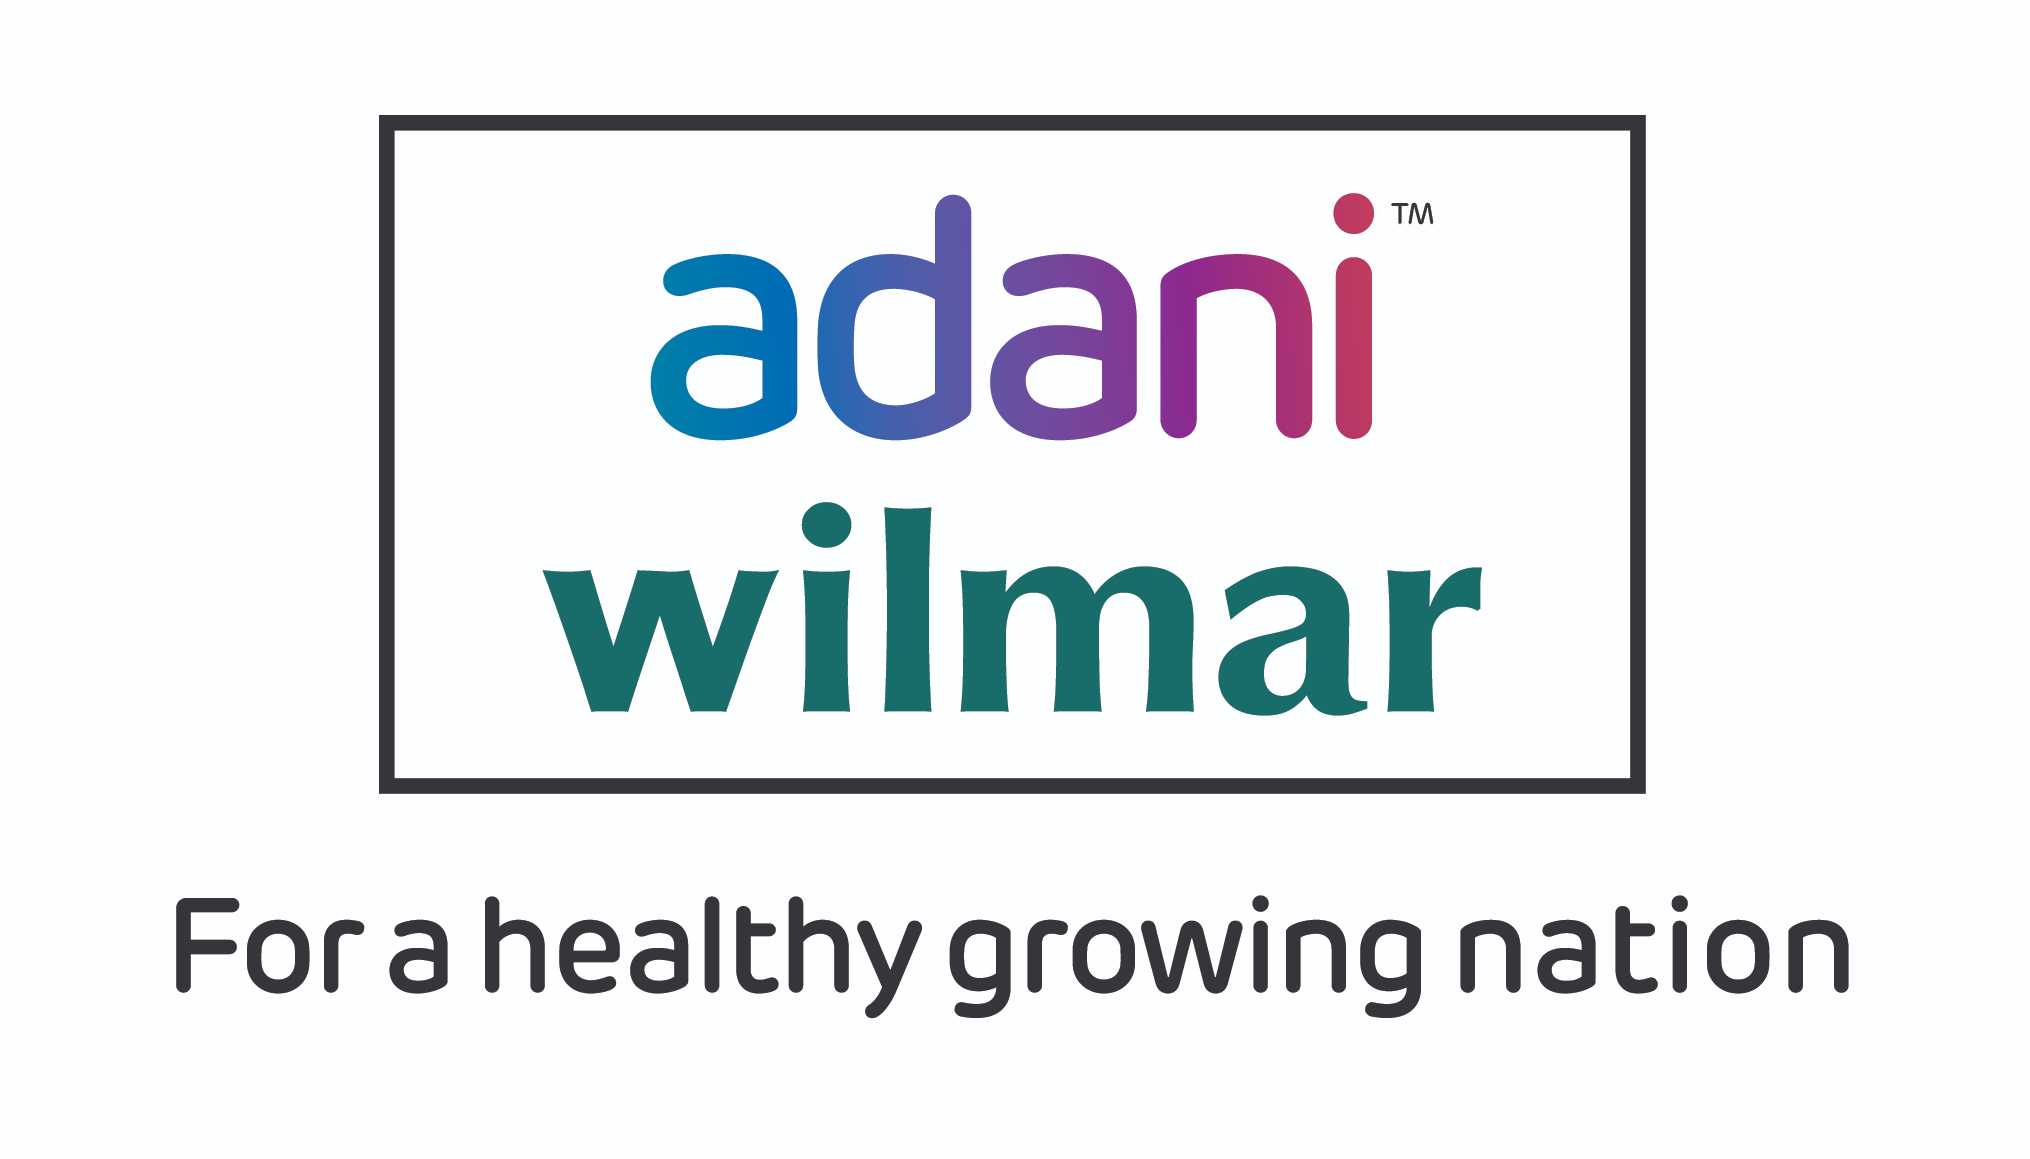 Adani Wilmar Limited IPO